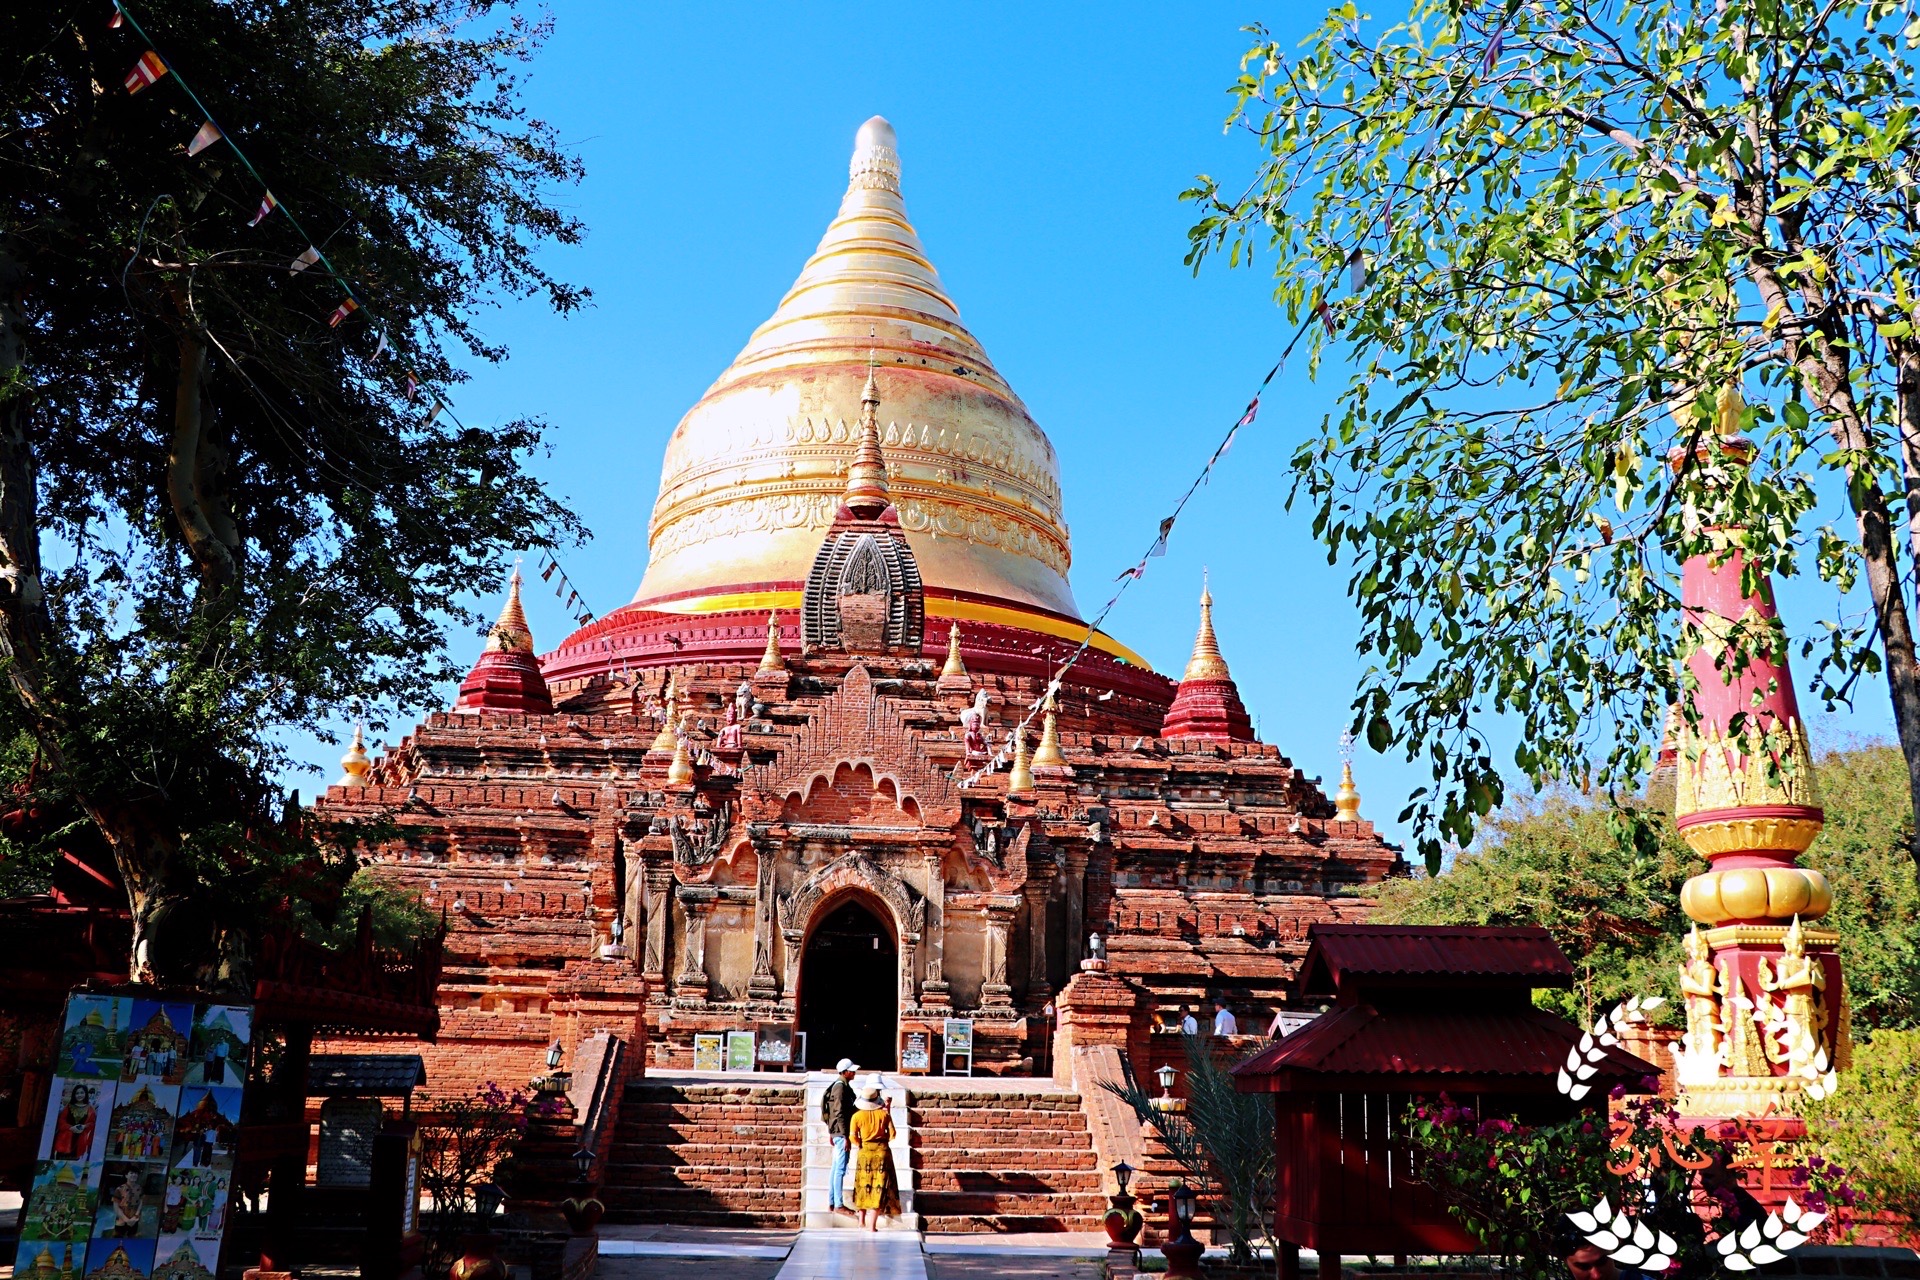 Dhamma-ya-za-ka Pagoda达玛亚日卡佛塔，佛塔是特有的五边形，区别于普通佛塔的四边